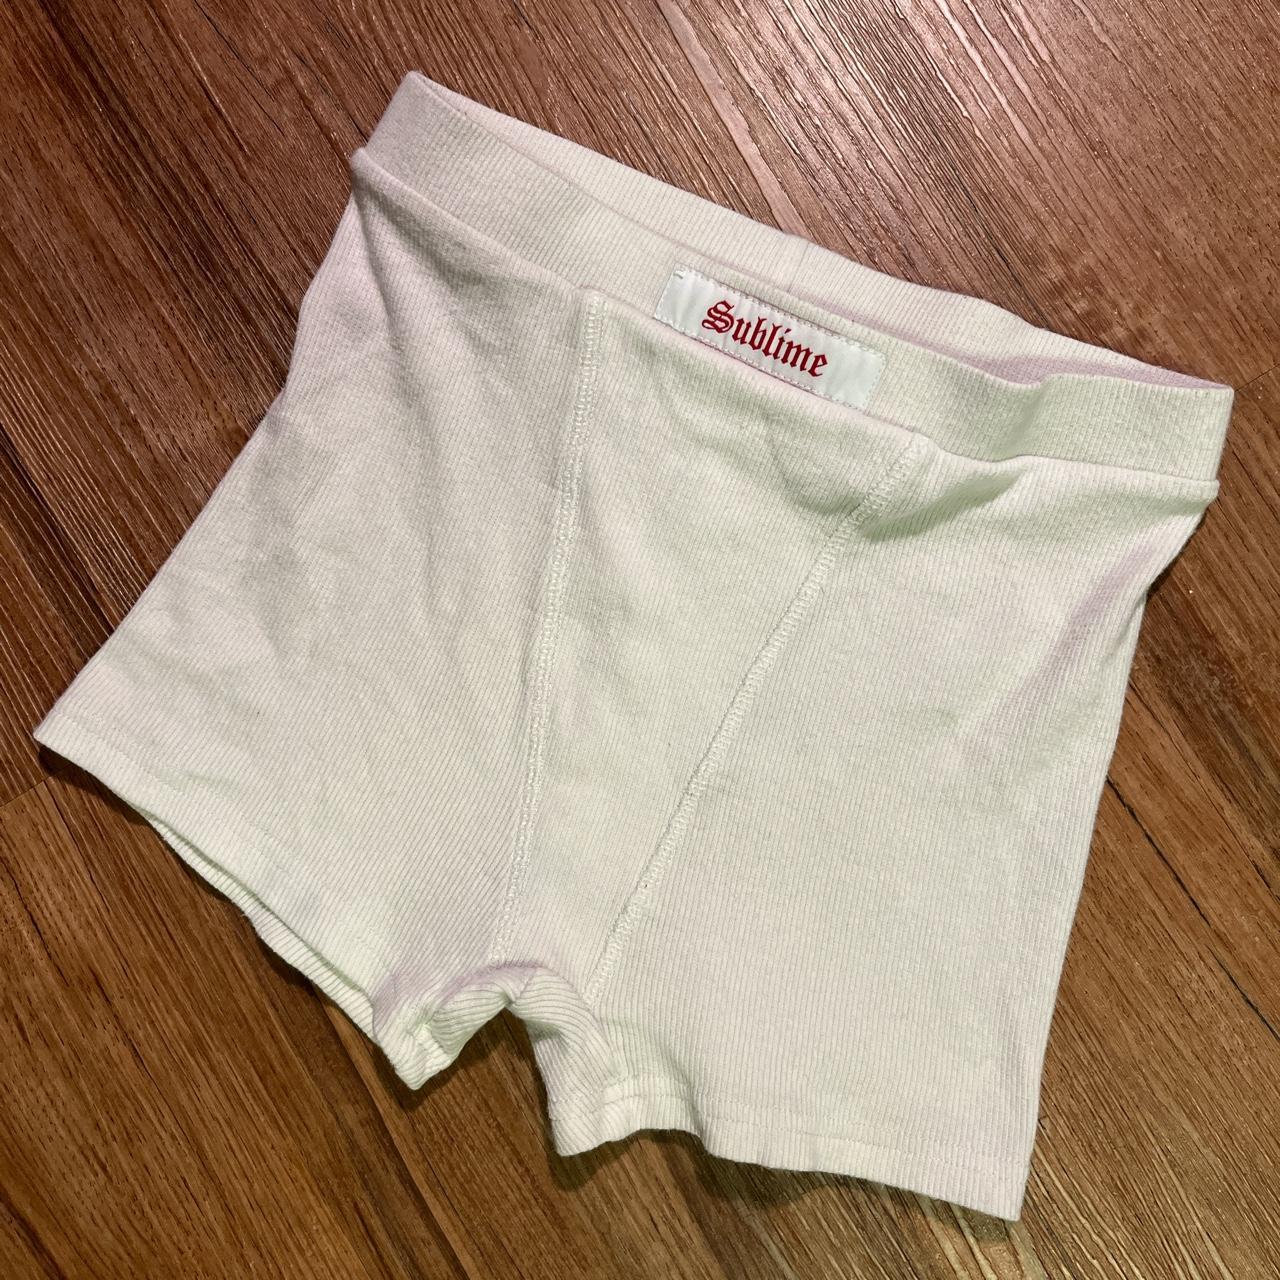 Charlotte Hornets Striped Shorts • size Large - Depop